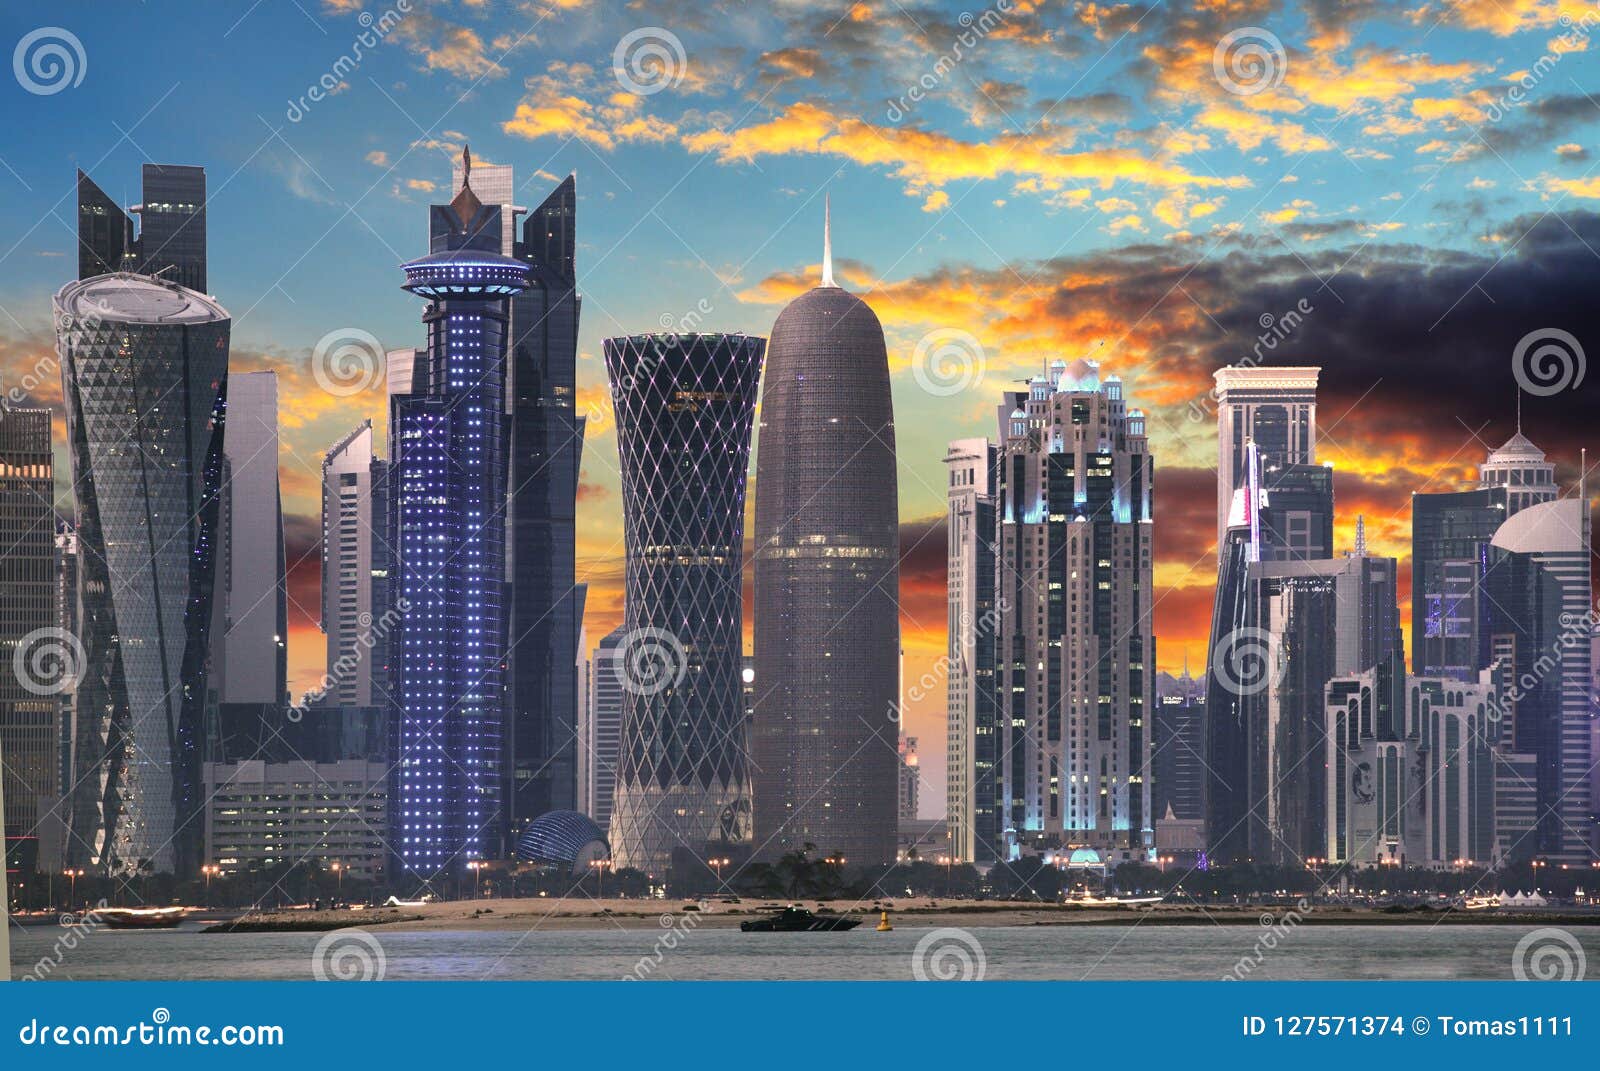 the skyline of doha, qatar before sunset